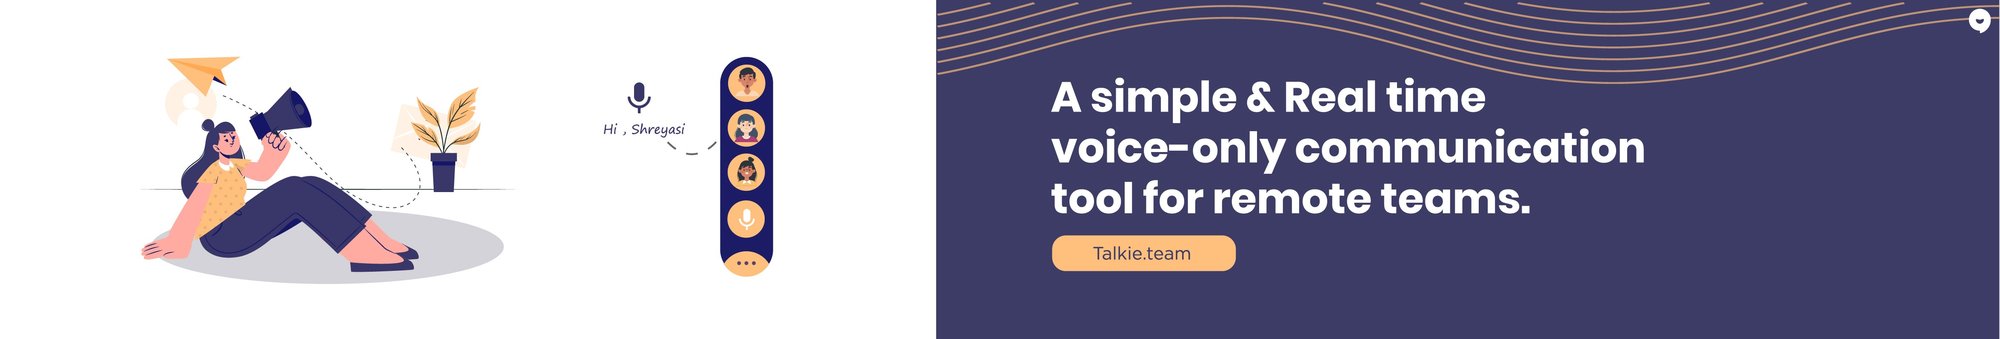 Remote work voice tool for convenient conversations 